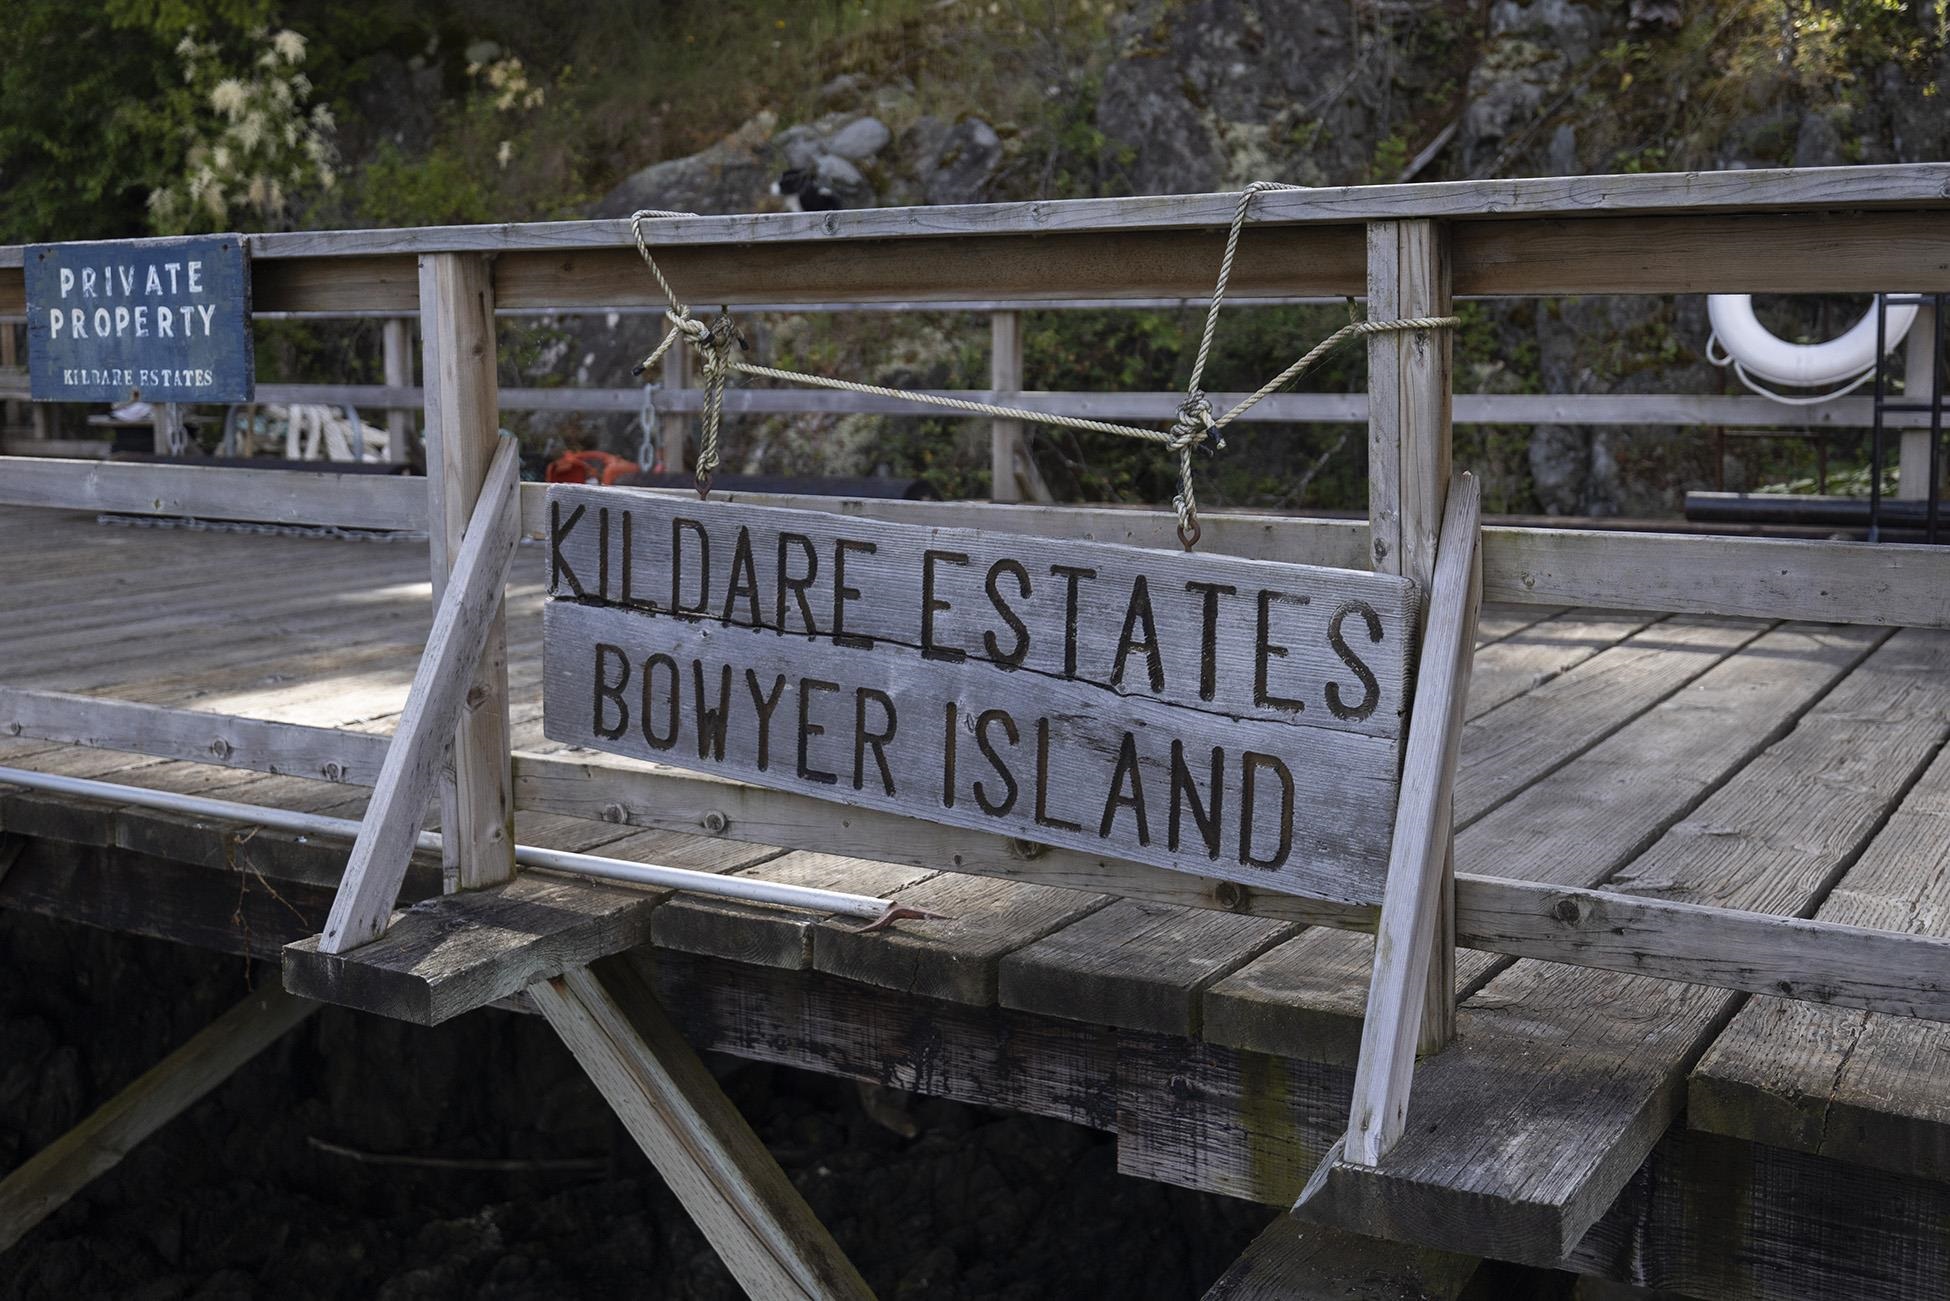 Listing image of LOT 1 KILDARE ESTATES BOWYER ISLAND